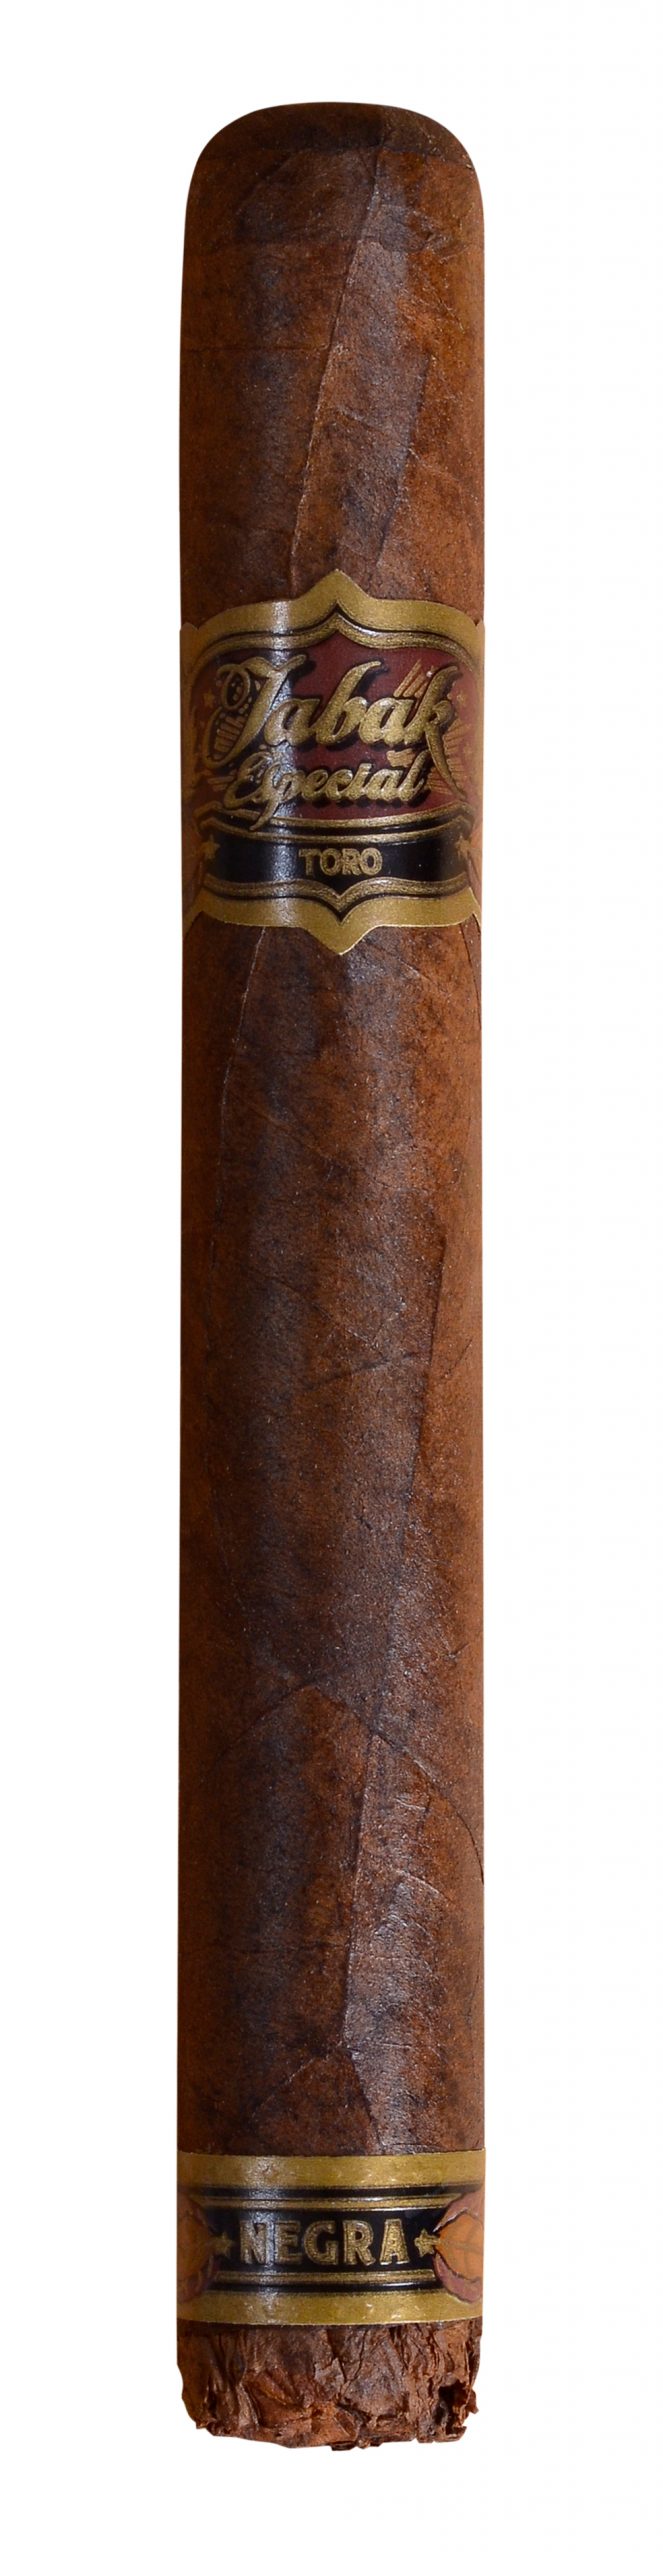 tabak negra toro single cigar